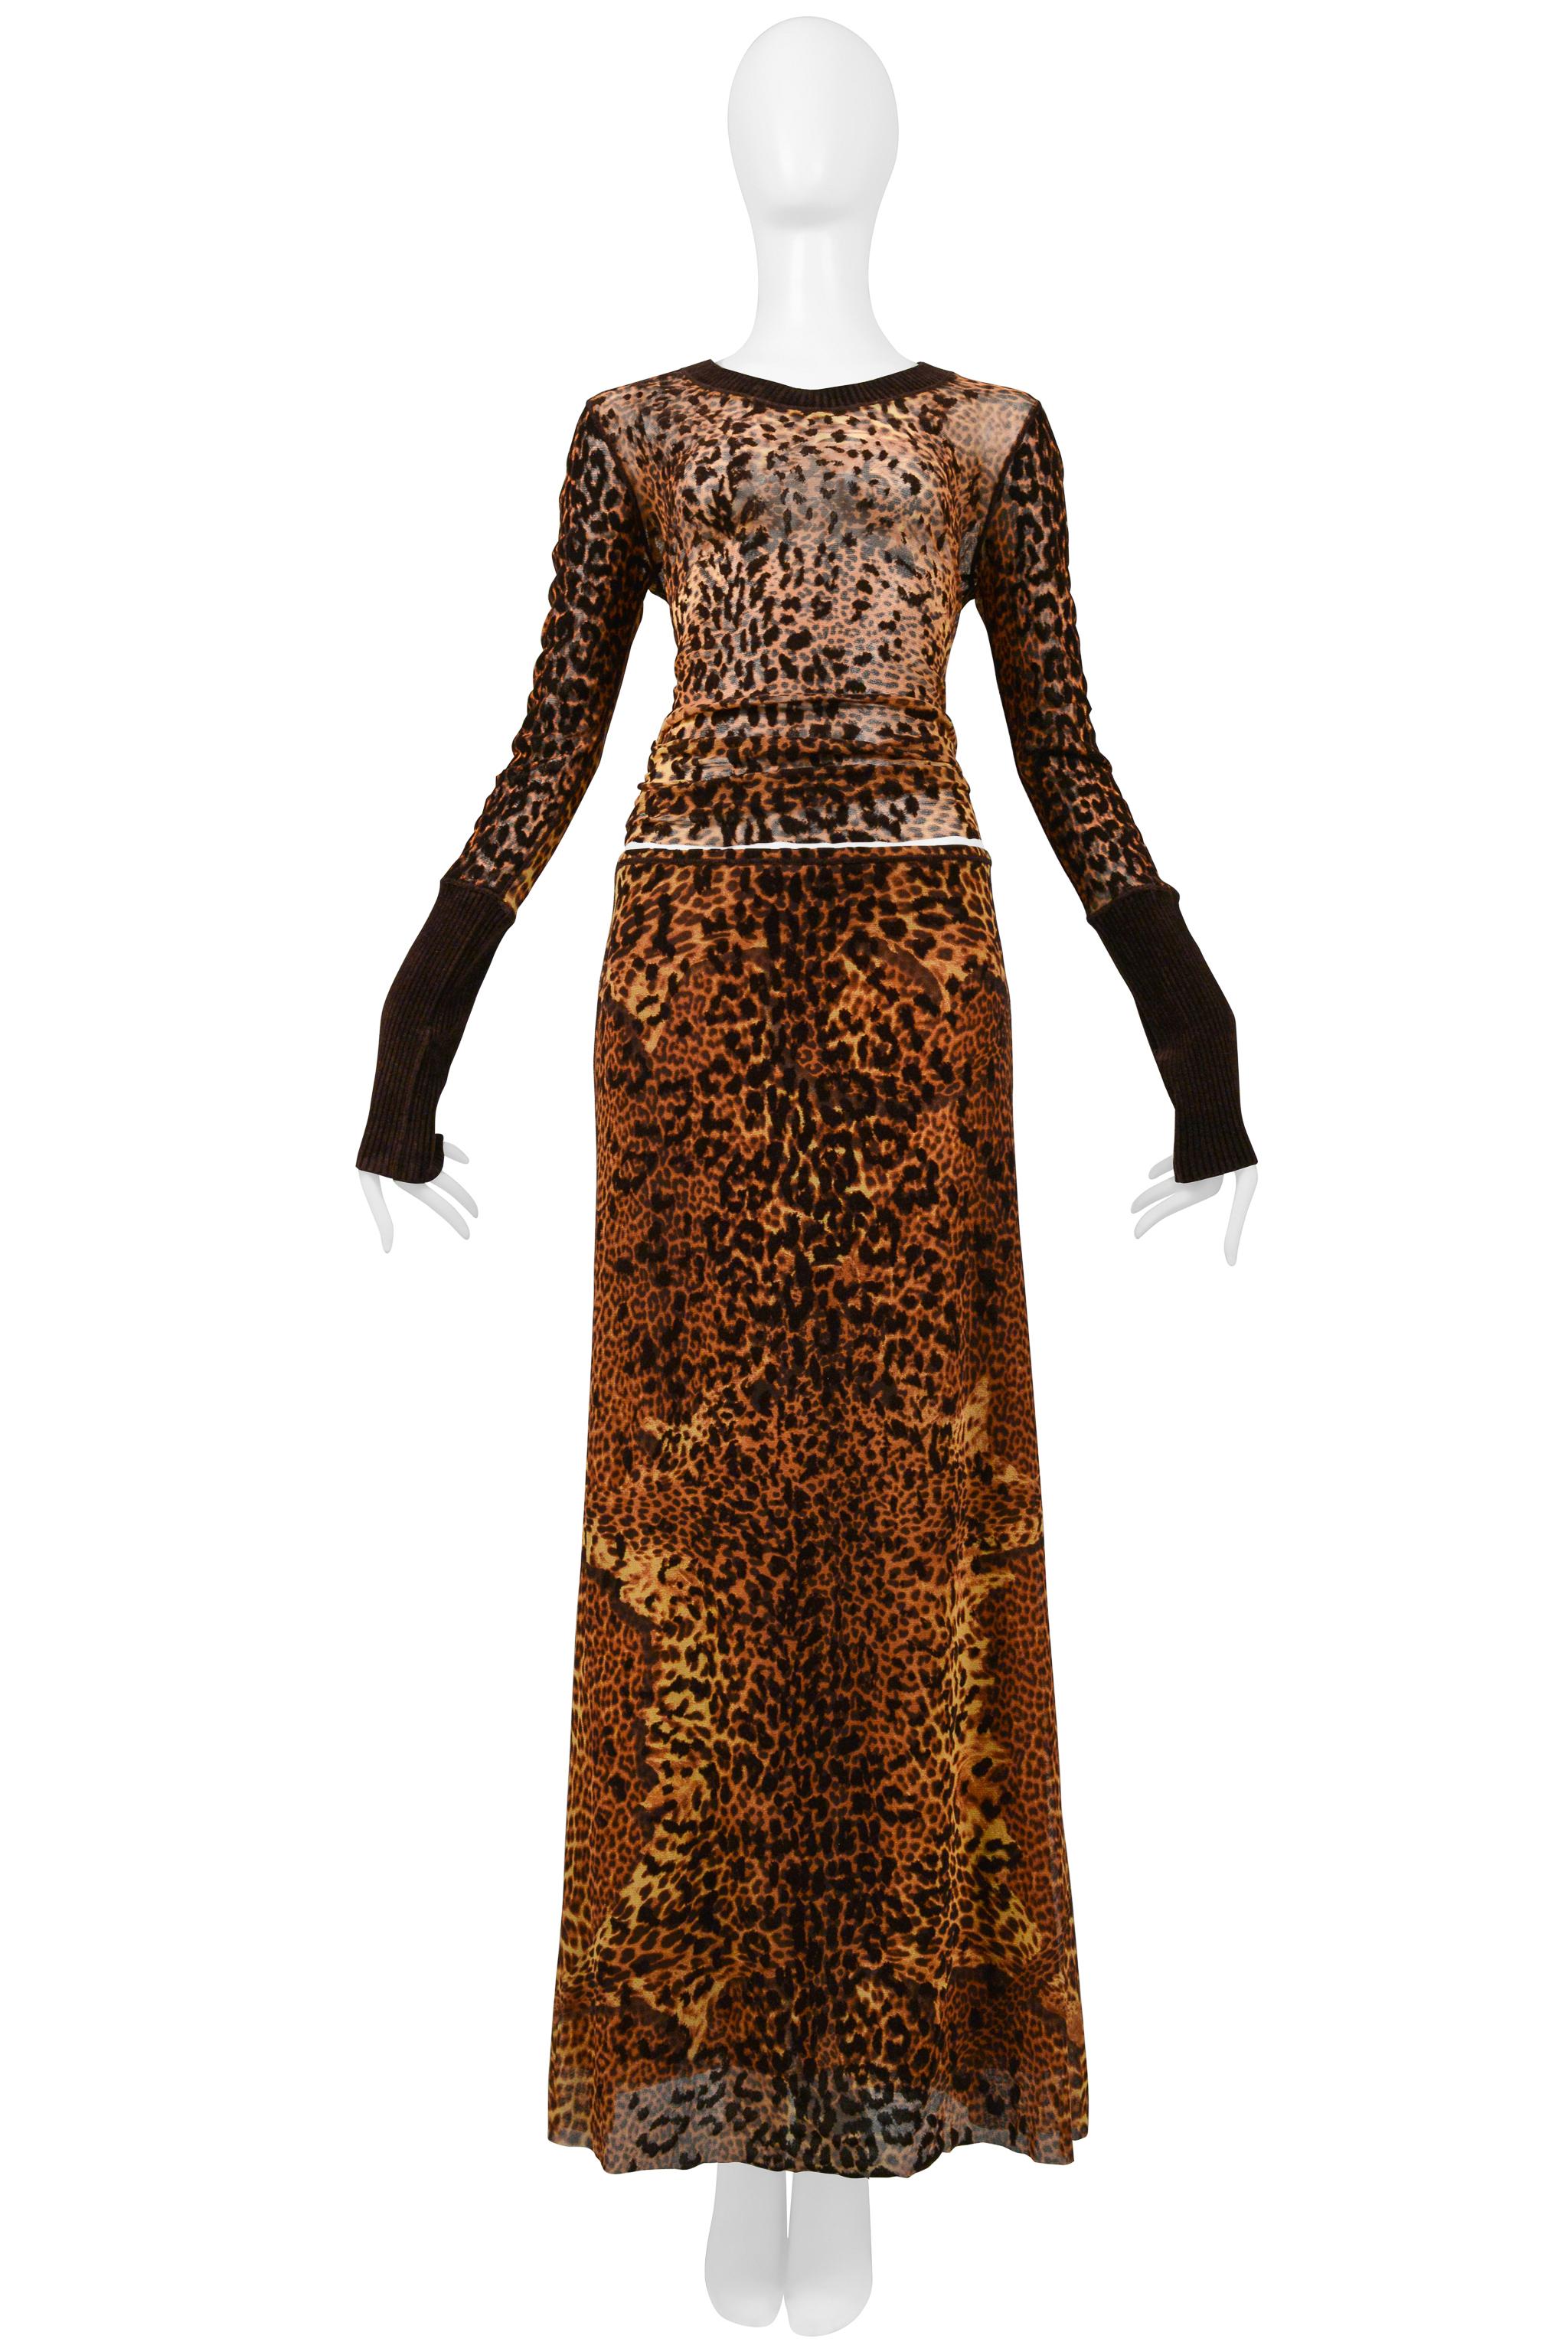 Women's Jean Paul Gaultier Leopard Print Top & Skirt Ensemble